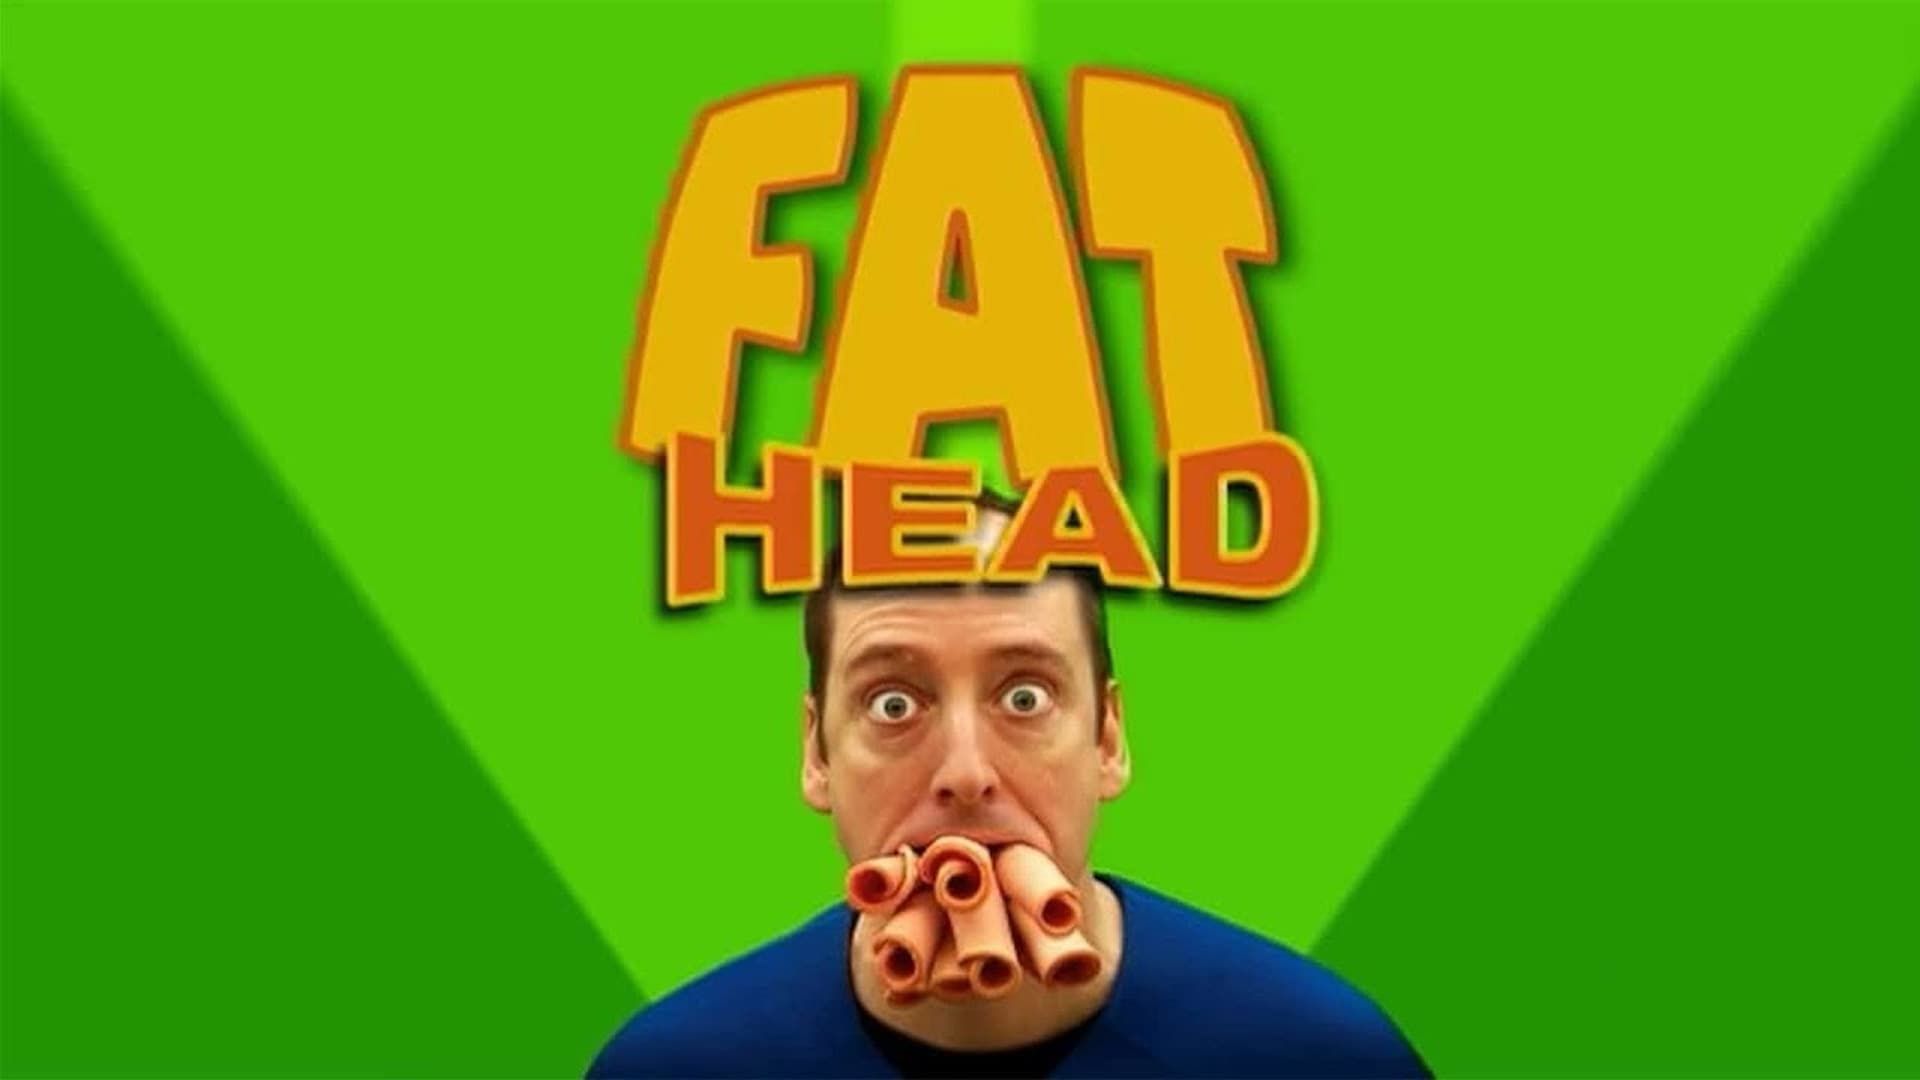 Fat Head background